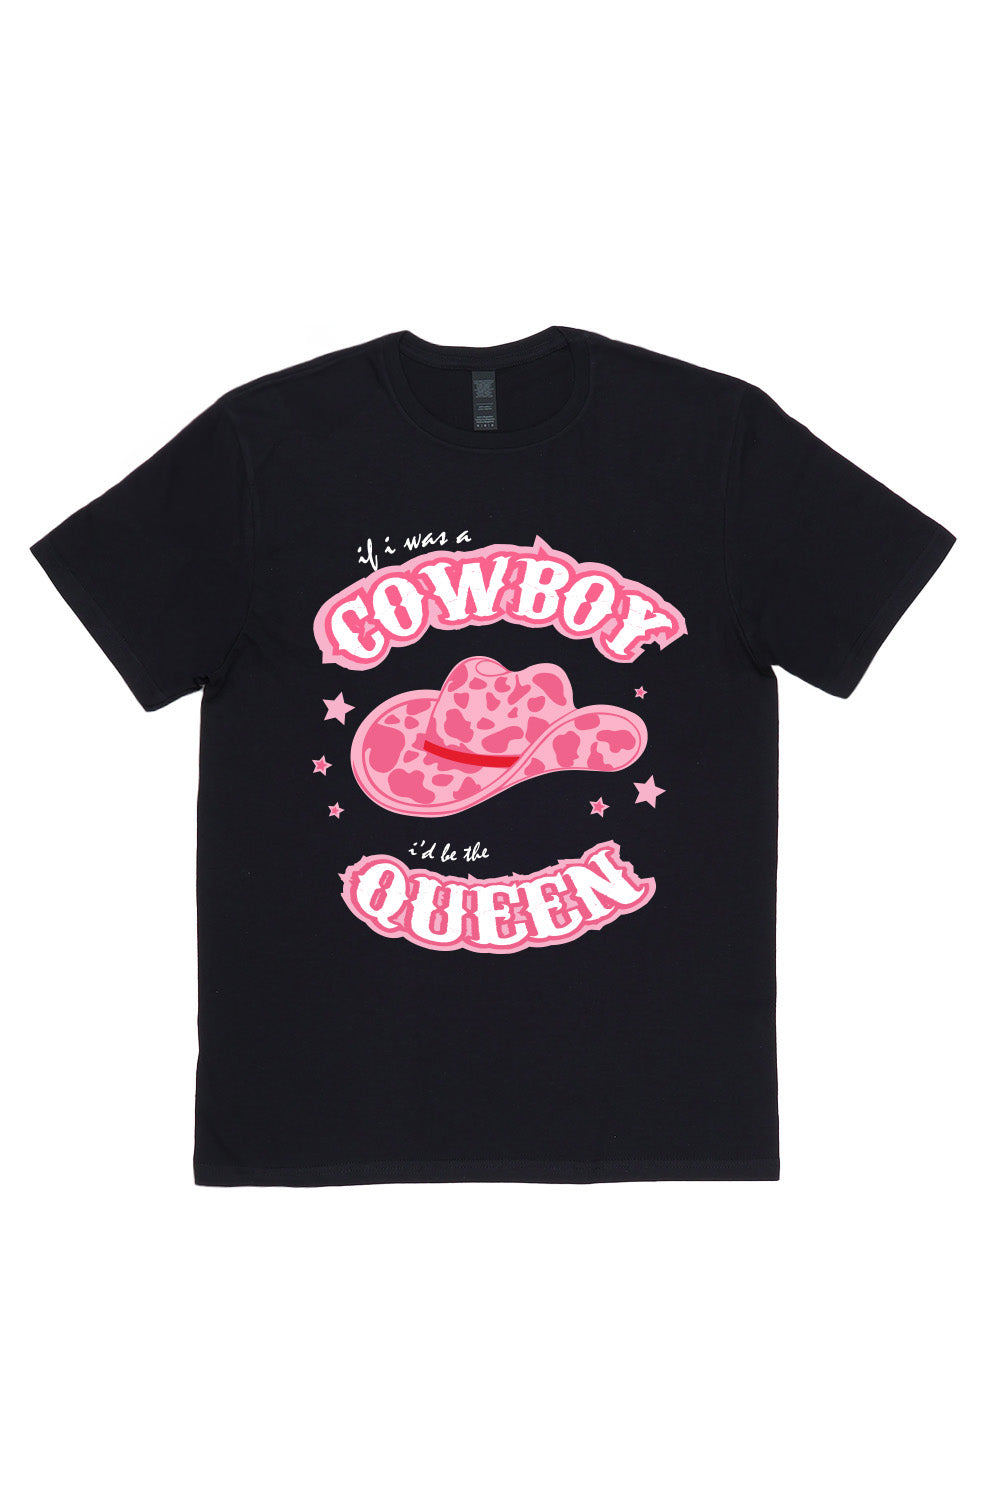 Cowboy Queen T-Shirt in Black (Custom Packs)